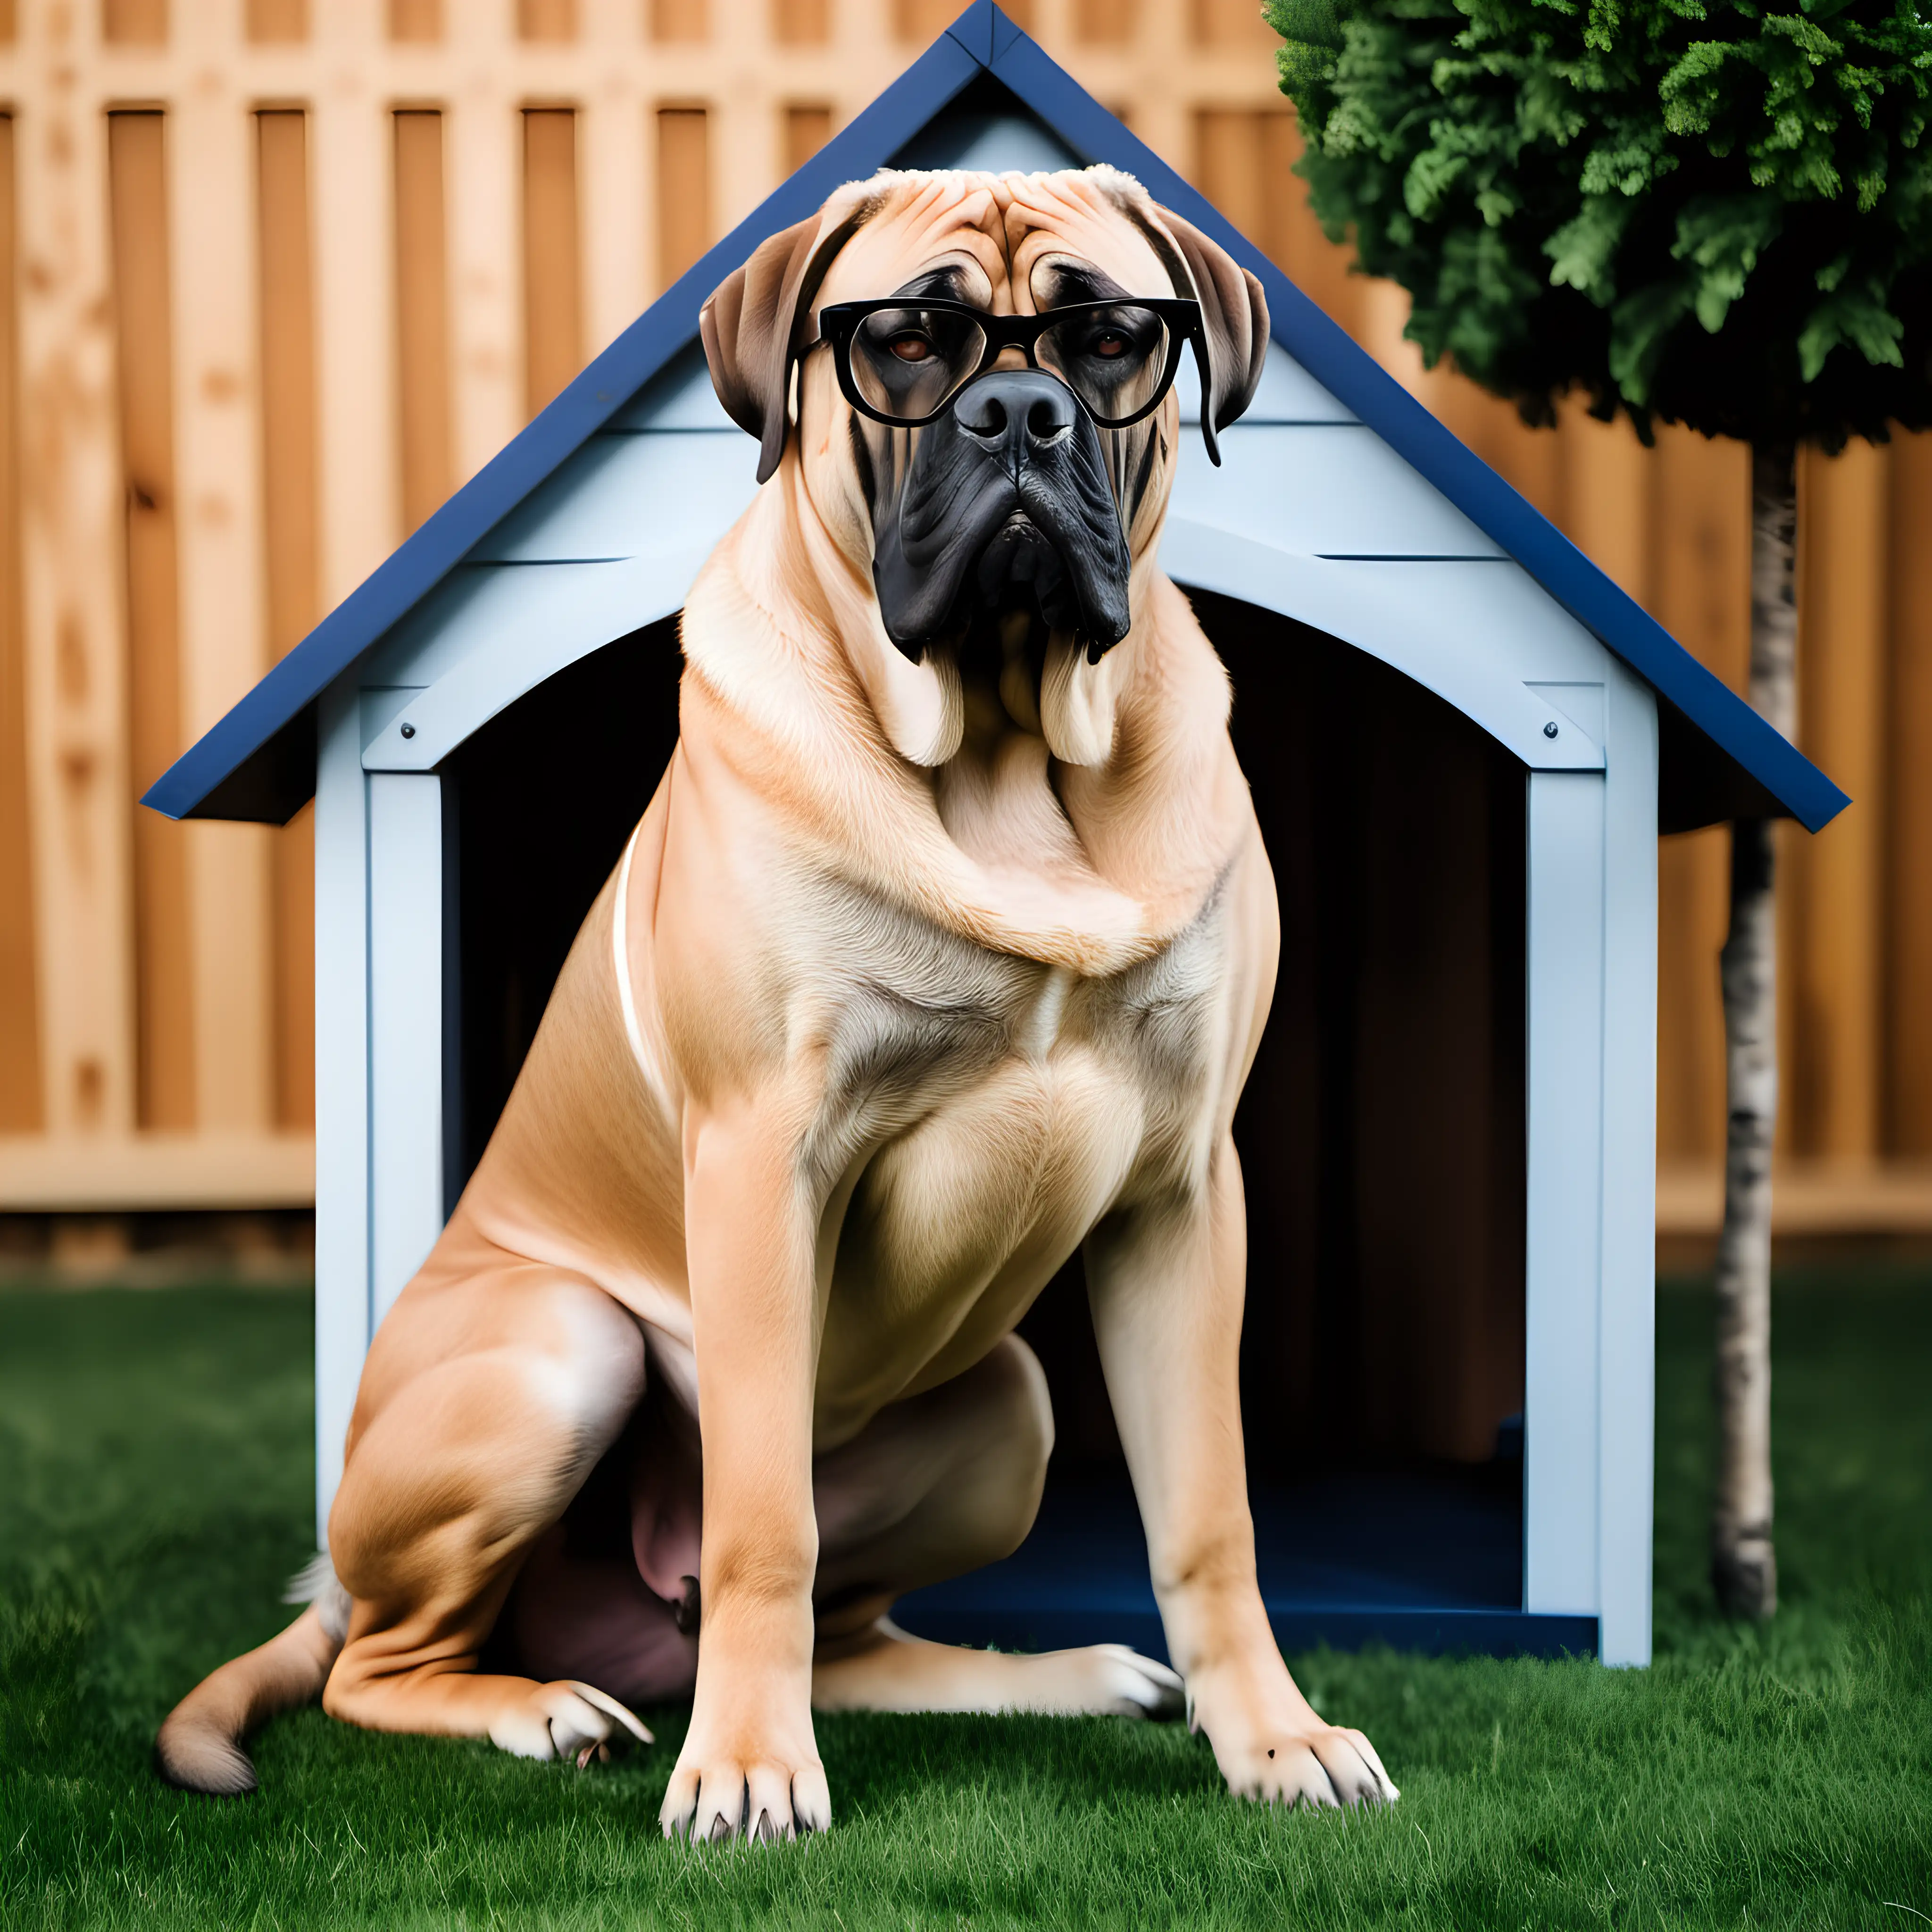 Stylish Bullmastiff Posing with Chic Dog House